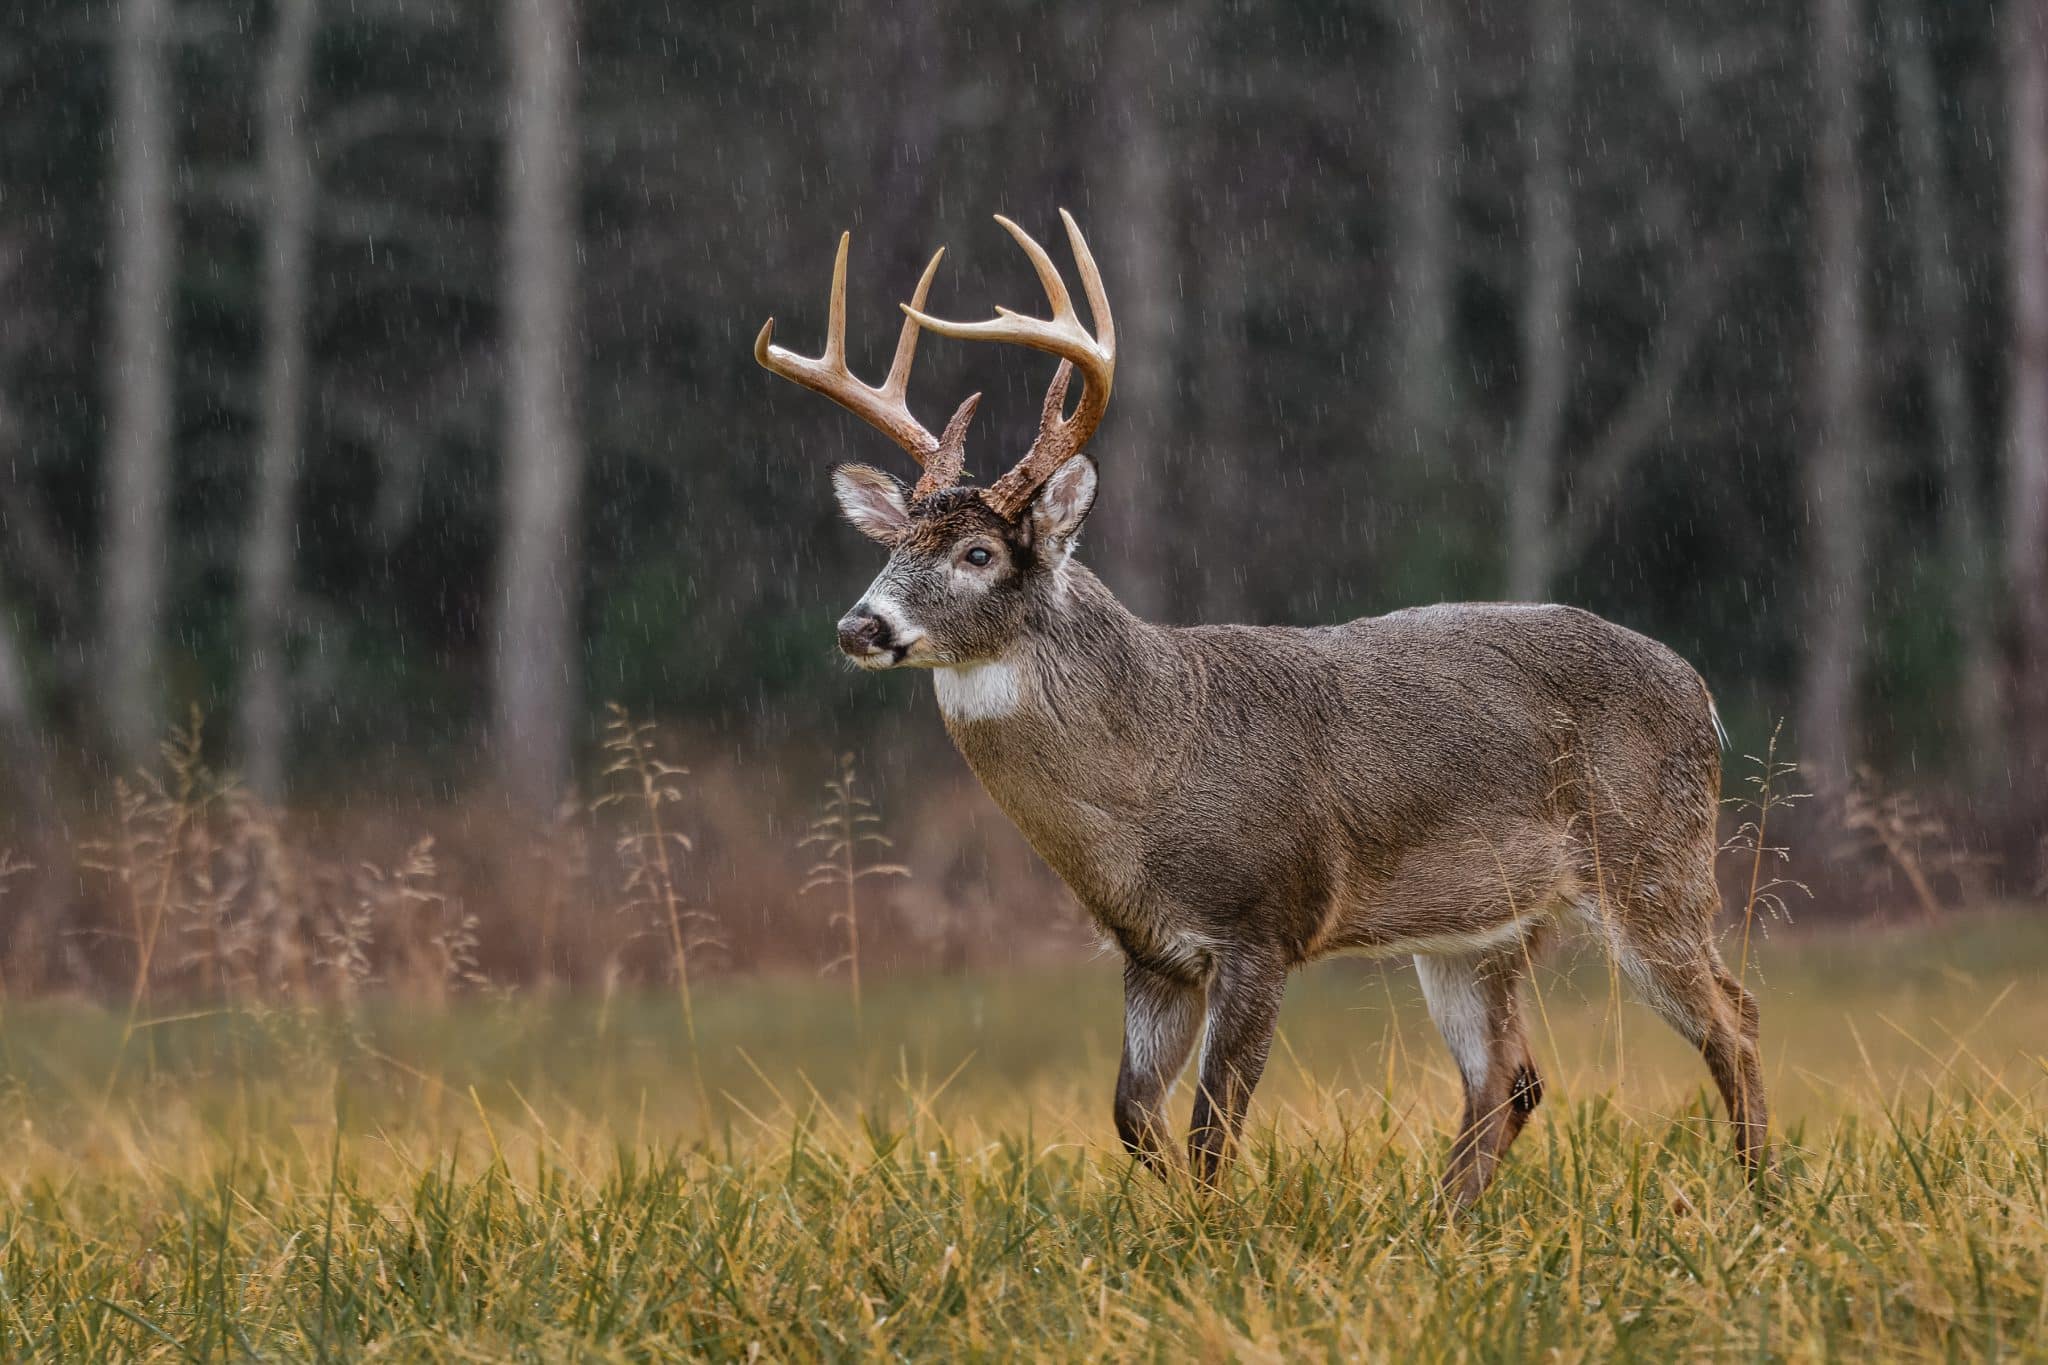 Muzzleloading Season Nears End, DNR Encourages Hunters to Take Advantage